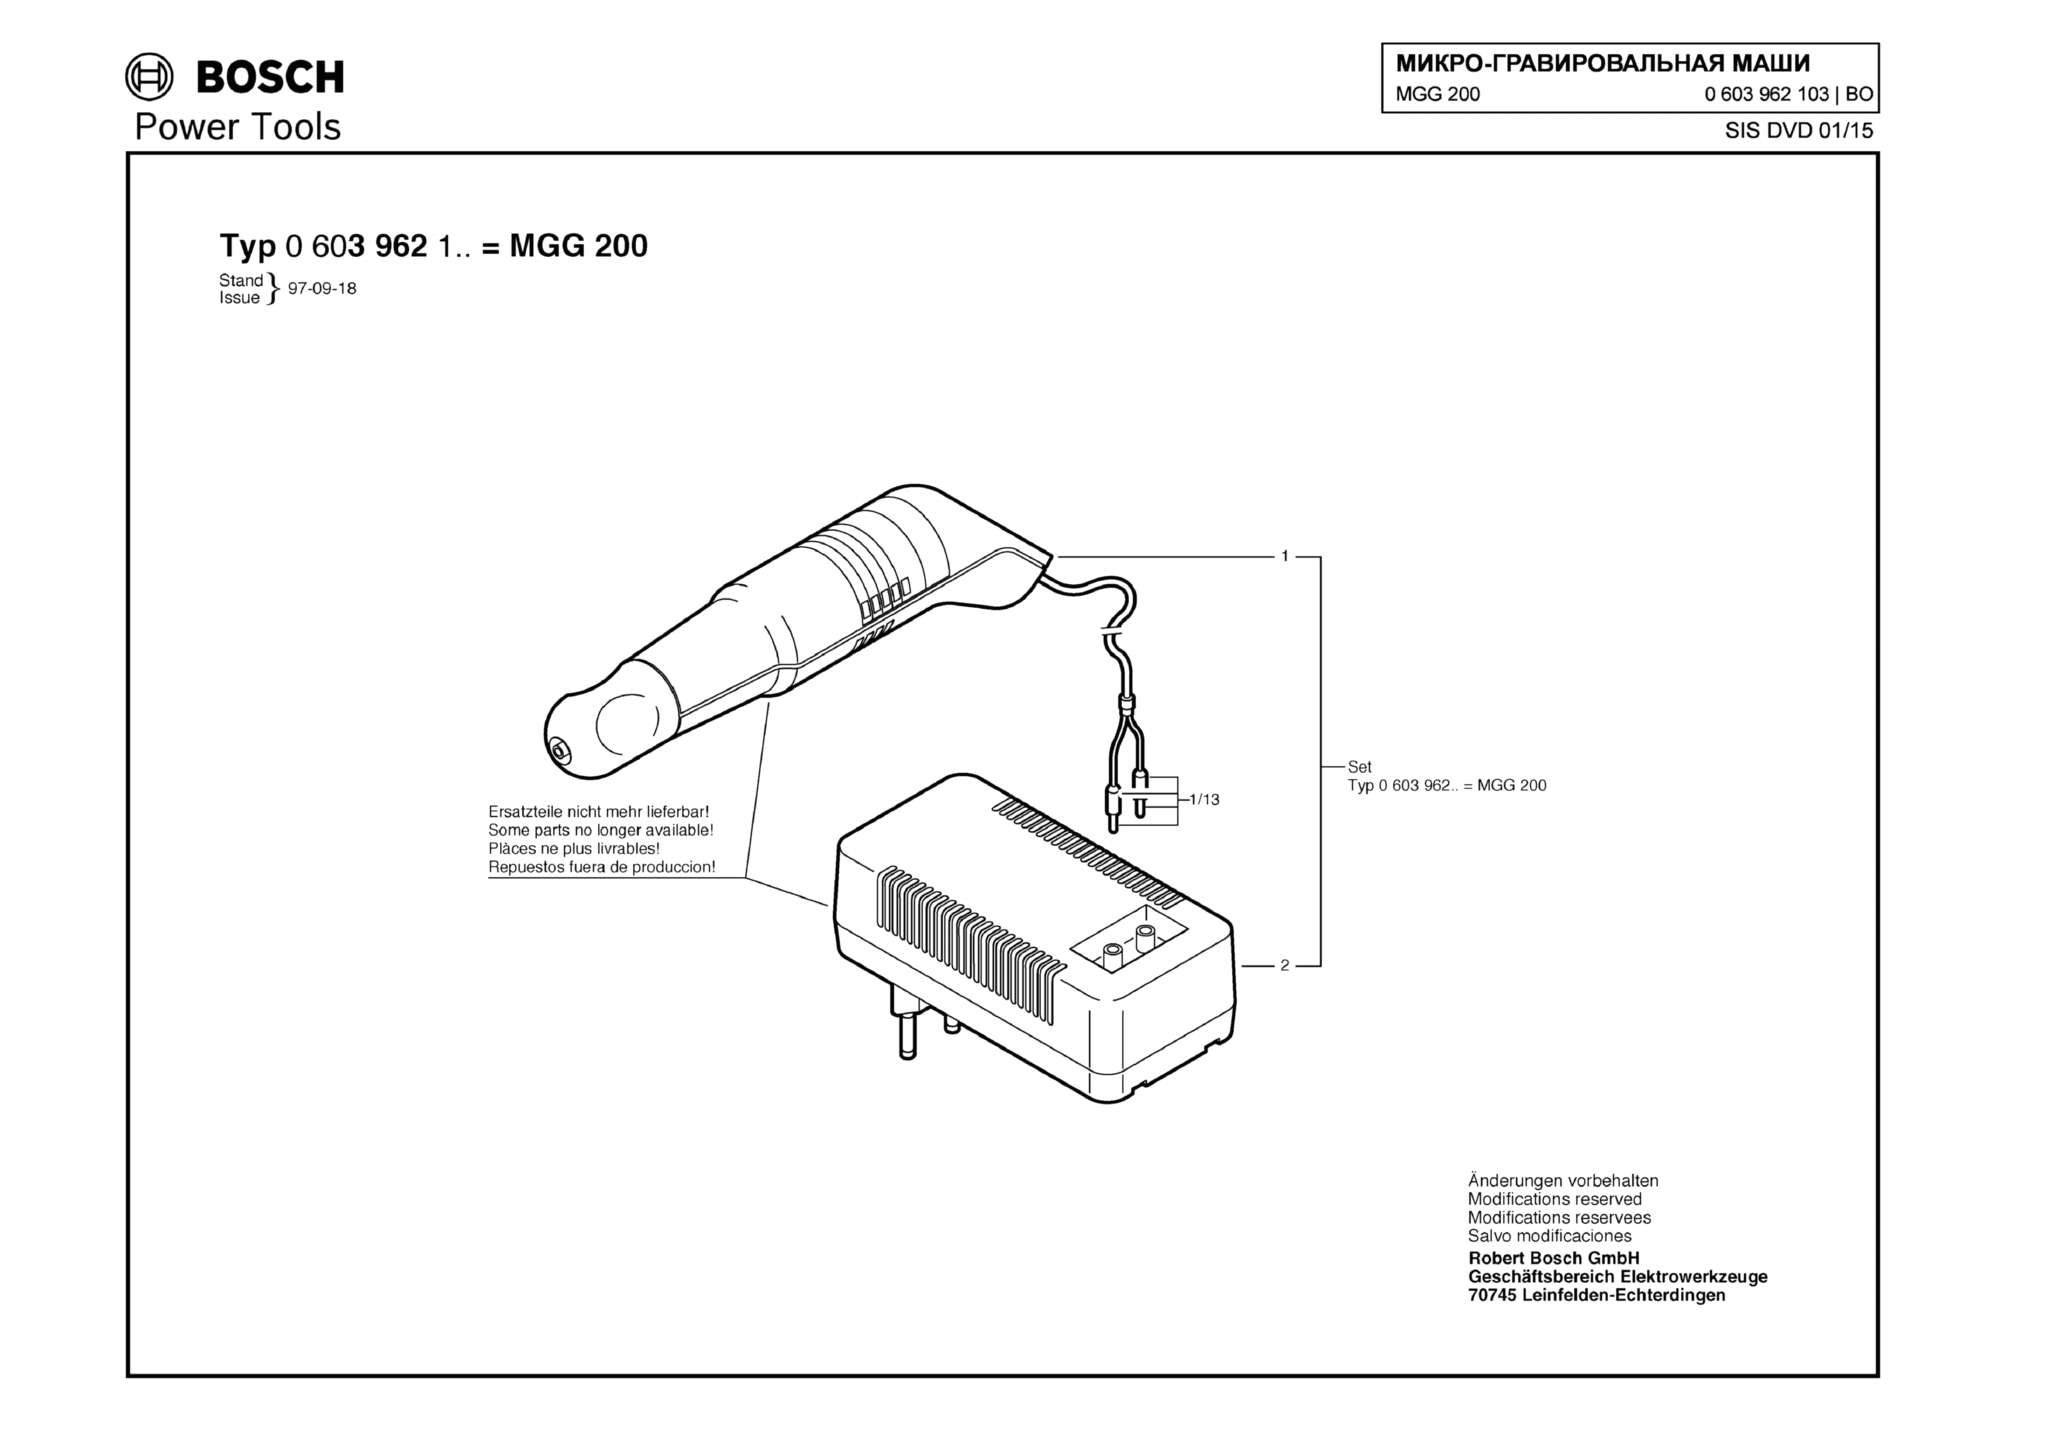 Запчасти, схема и деталировка Bosch MGG 200 (ТИП 0603962103)